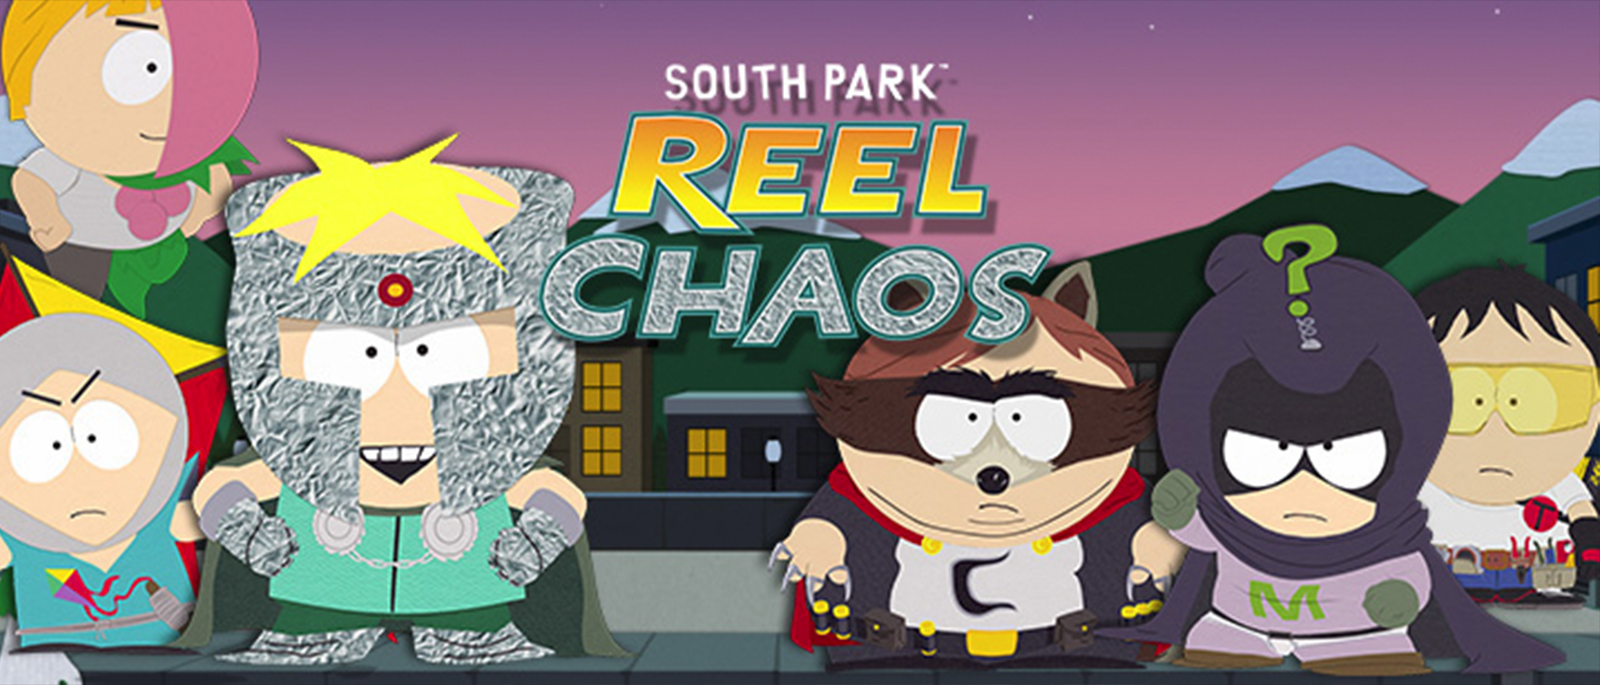 South Park Reel Chaos Slot Spiele